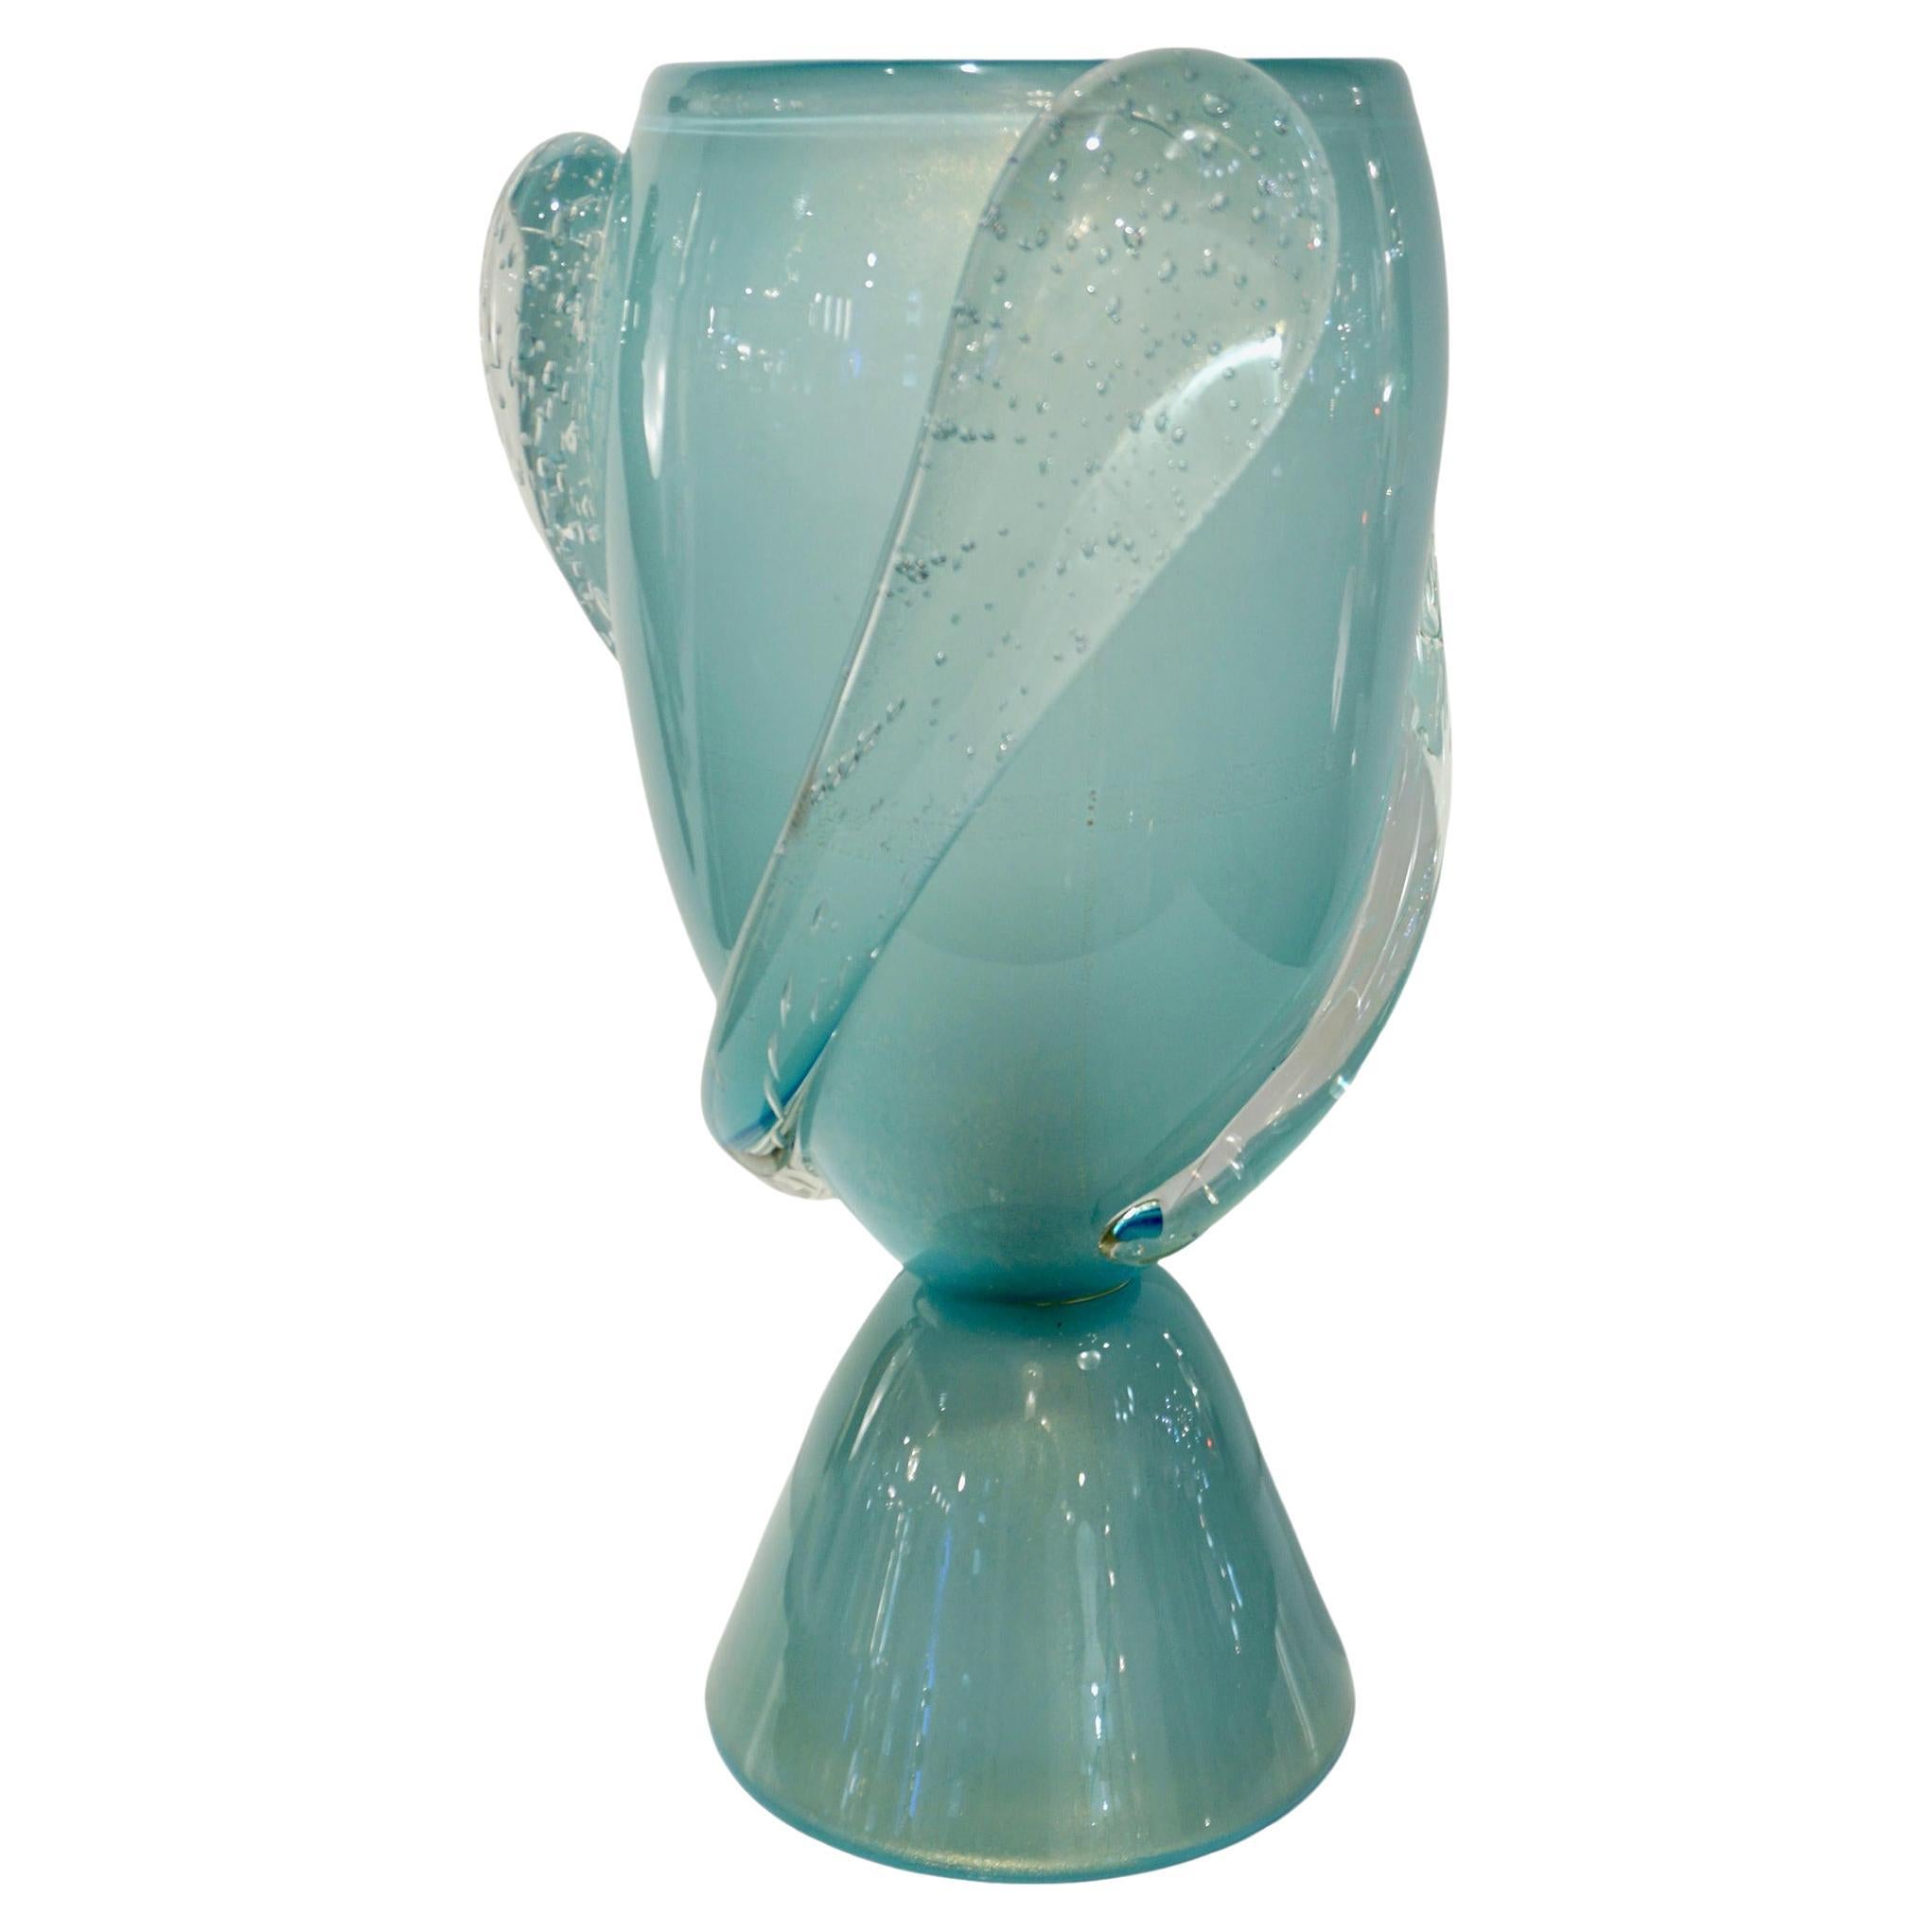 Barovier Toso Lampe organique en verre de Murano bleu aqua, contemporaine et moderne italienne